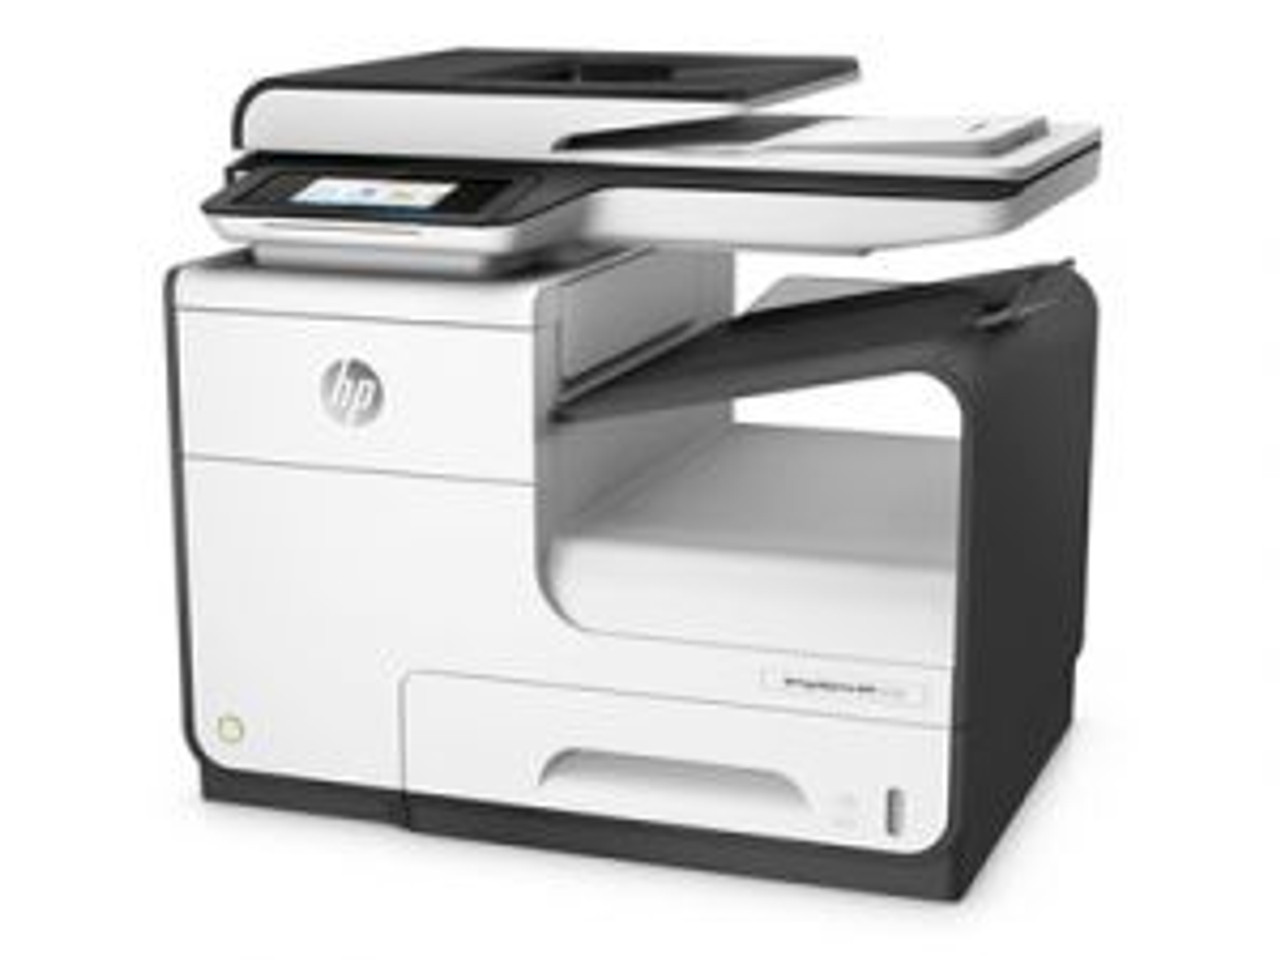 Printers & Cartridges,Printer,Inkjet printers,HP,D3Q19A